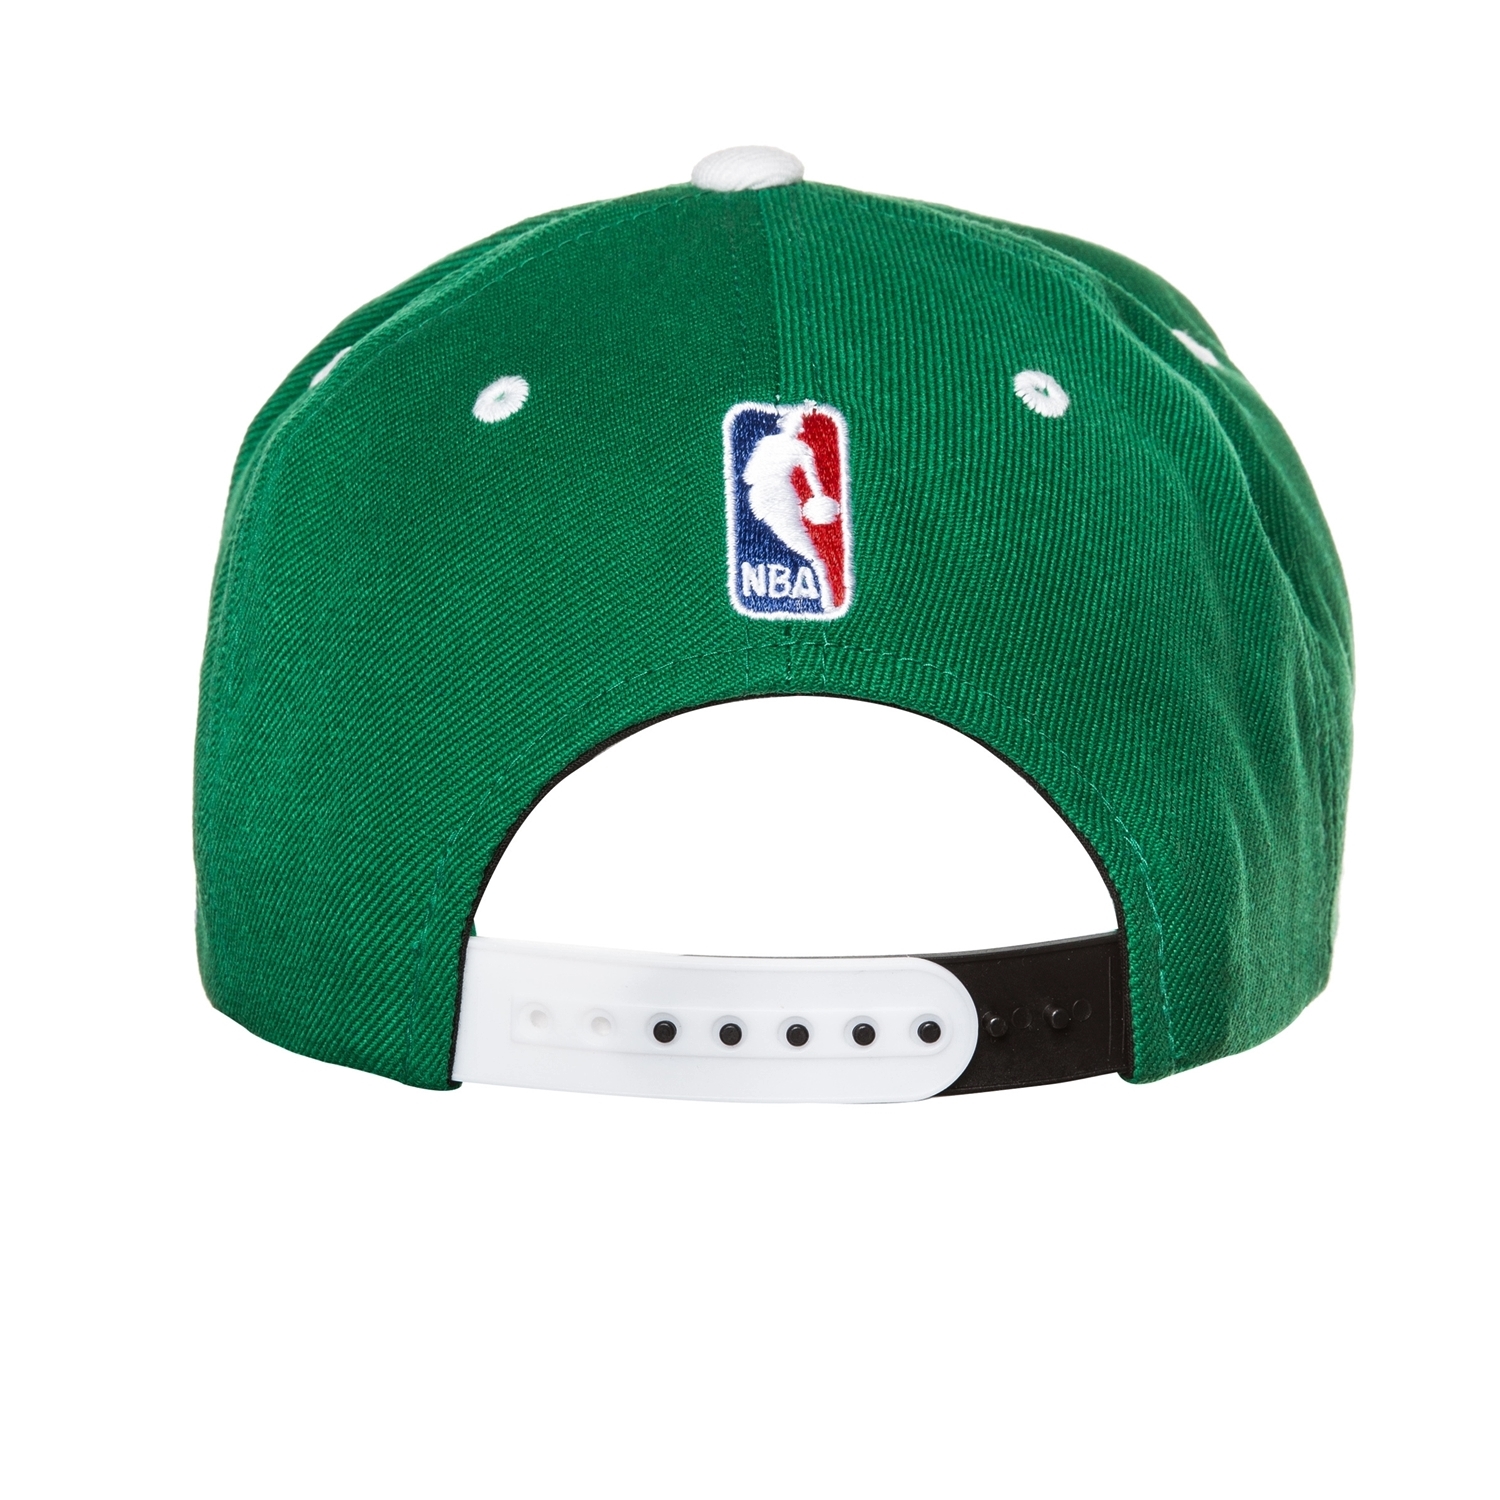 muy agradable Picasso Esperar Adidas NBA Gorra Boston Celtics Anthem Hat (verde)